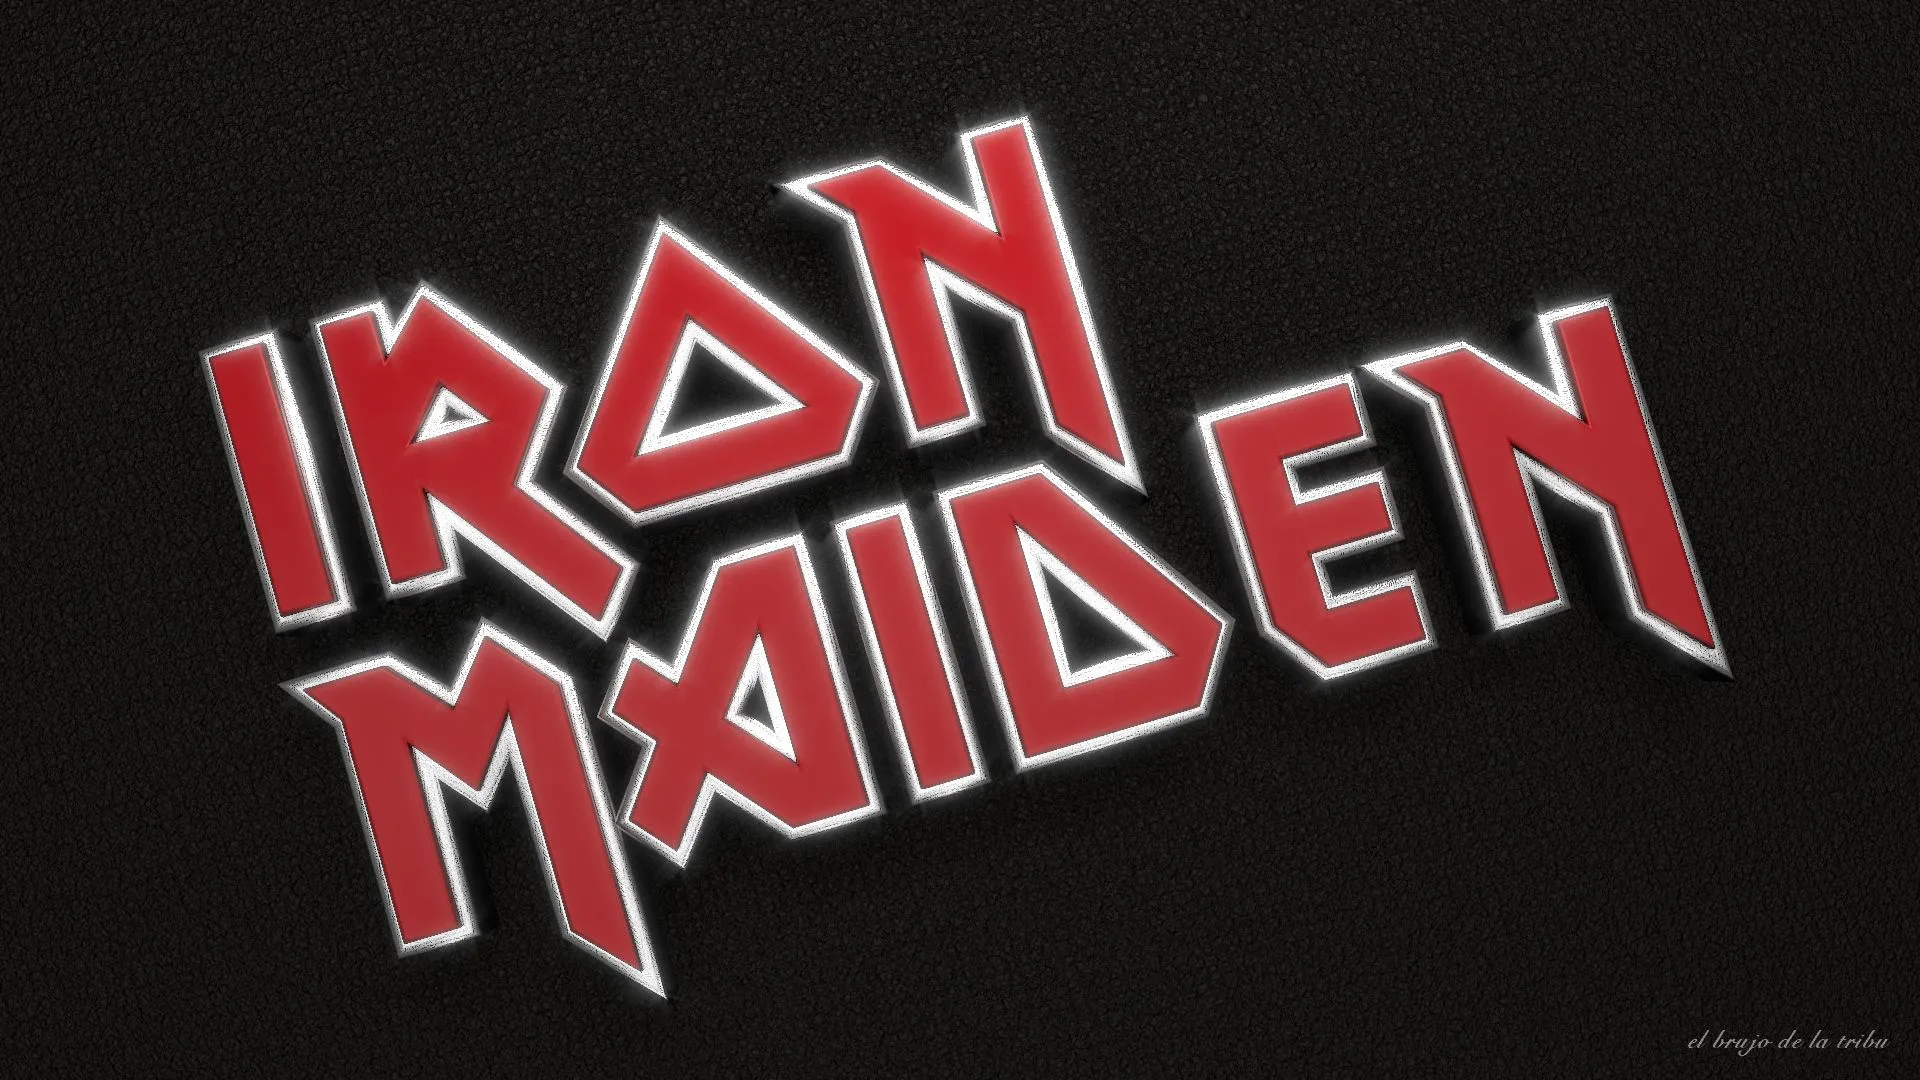 Iron Maiden Logo by elbrujodelatribu on DeviantArt